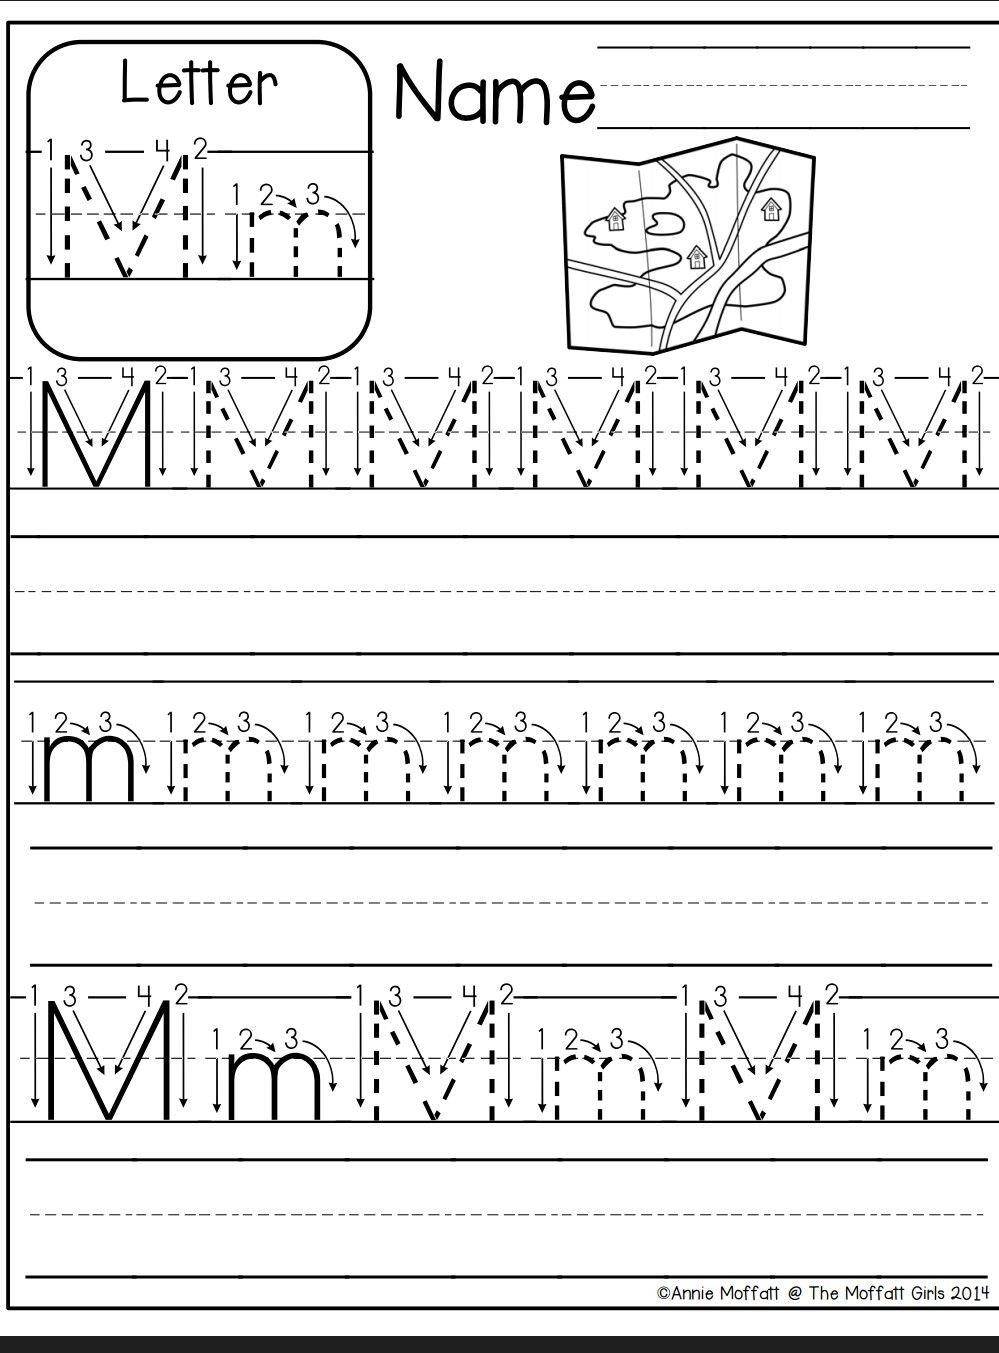 Letter M Worksheet | Kindergarten Abc Worksheets, Alphabet with regard to Letter M Tracing Worksheets Preschool